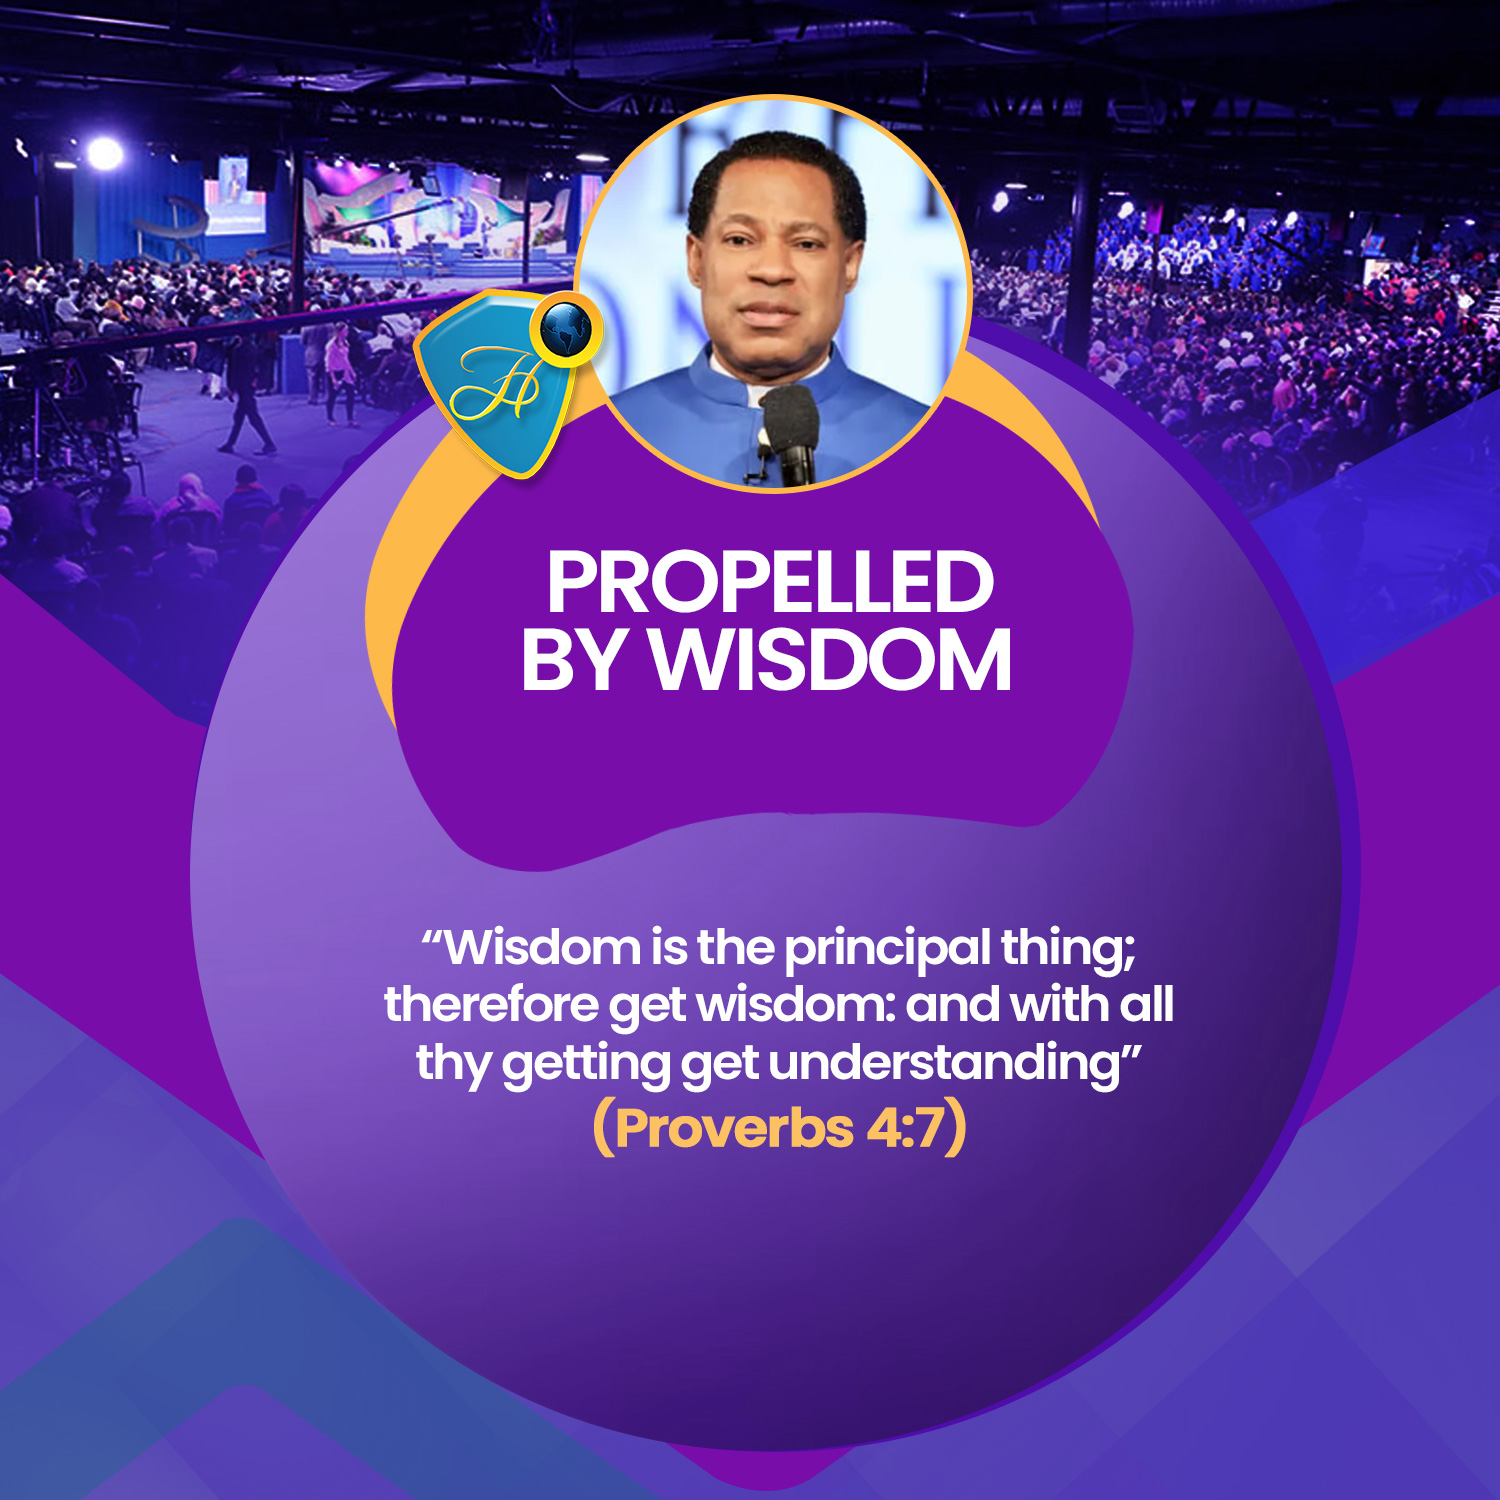 PROPELLED BY WISDOM